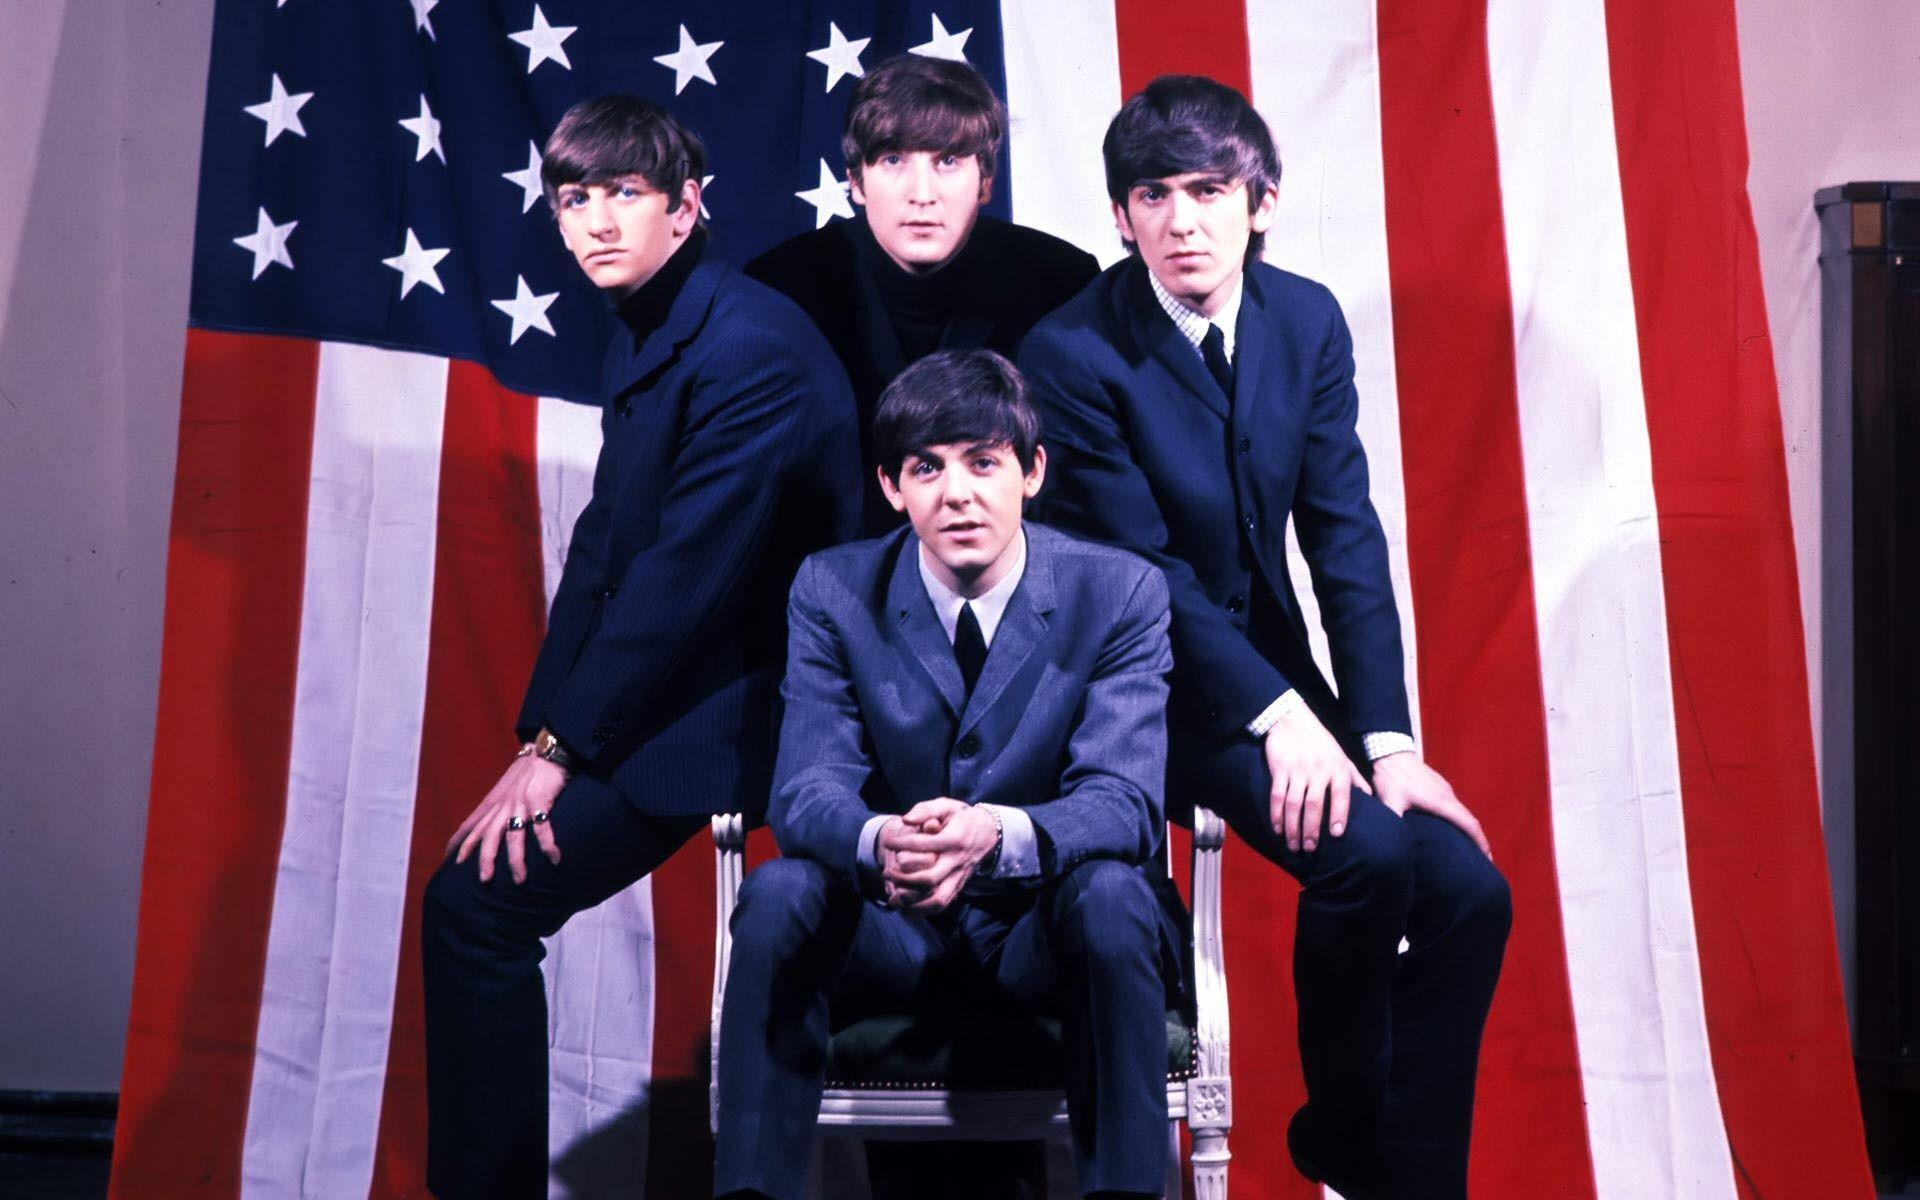 Outstanding The Beatles wallpaper. The Beatles wallpaper